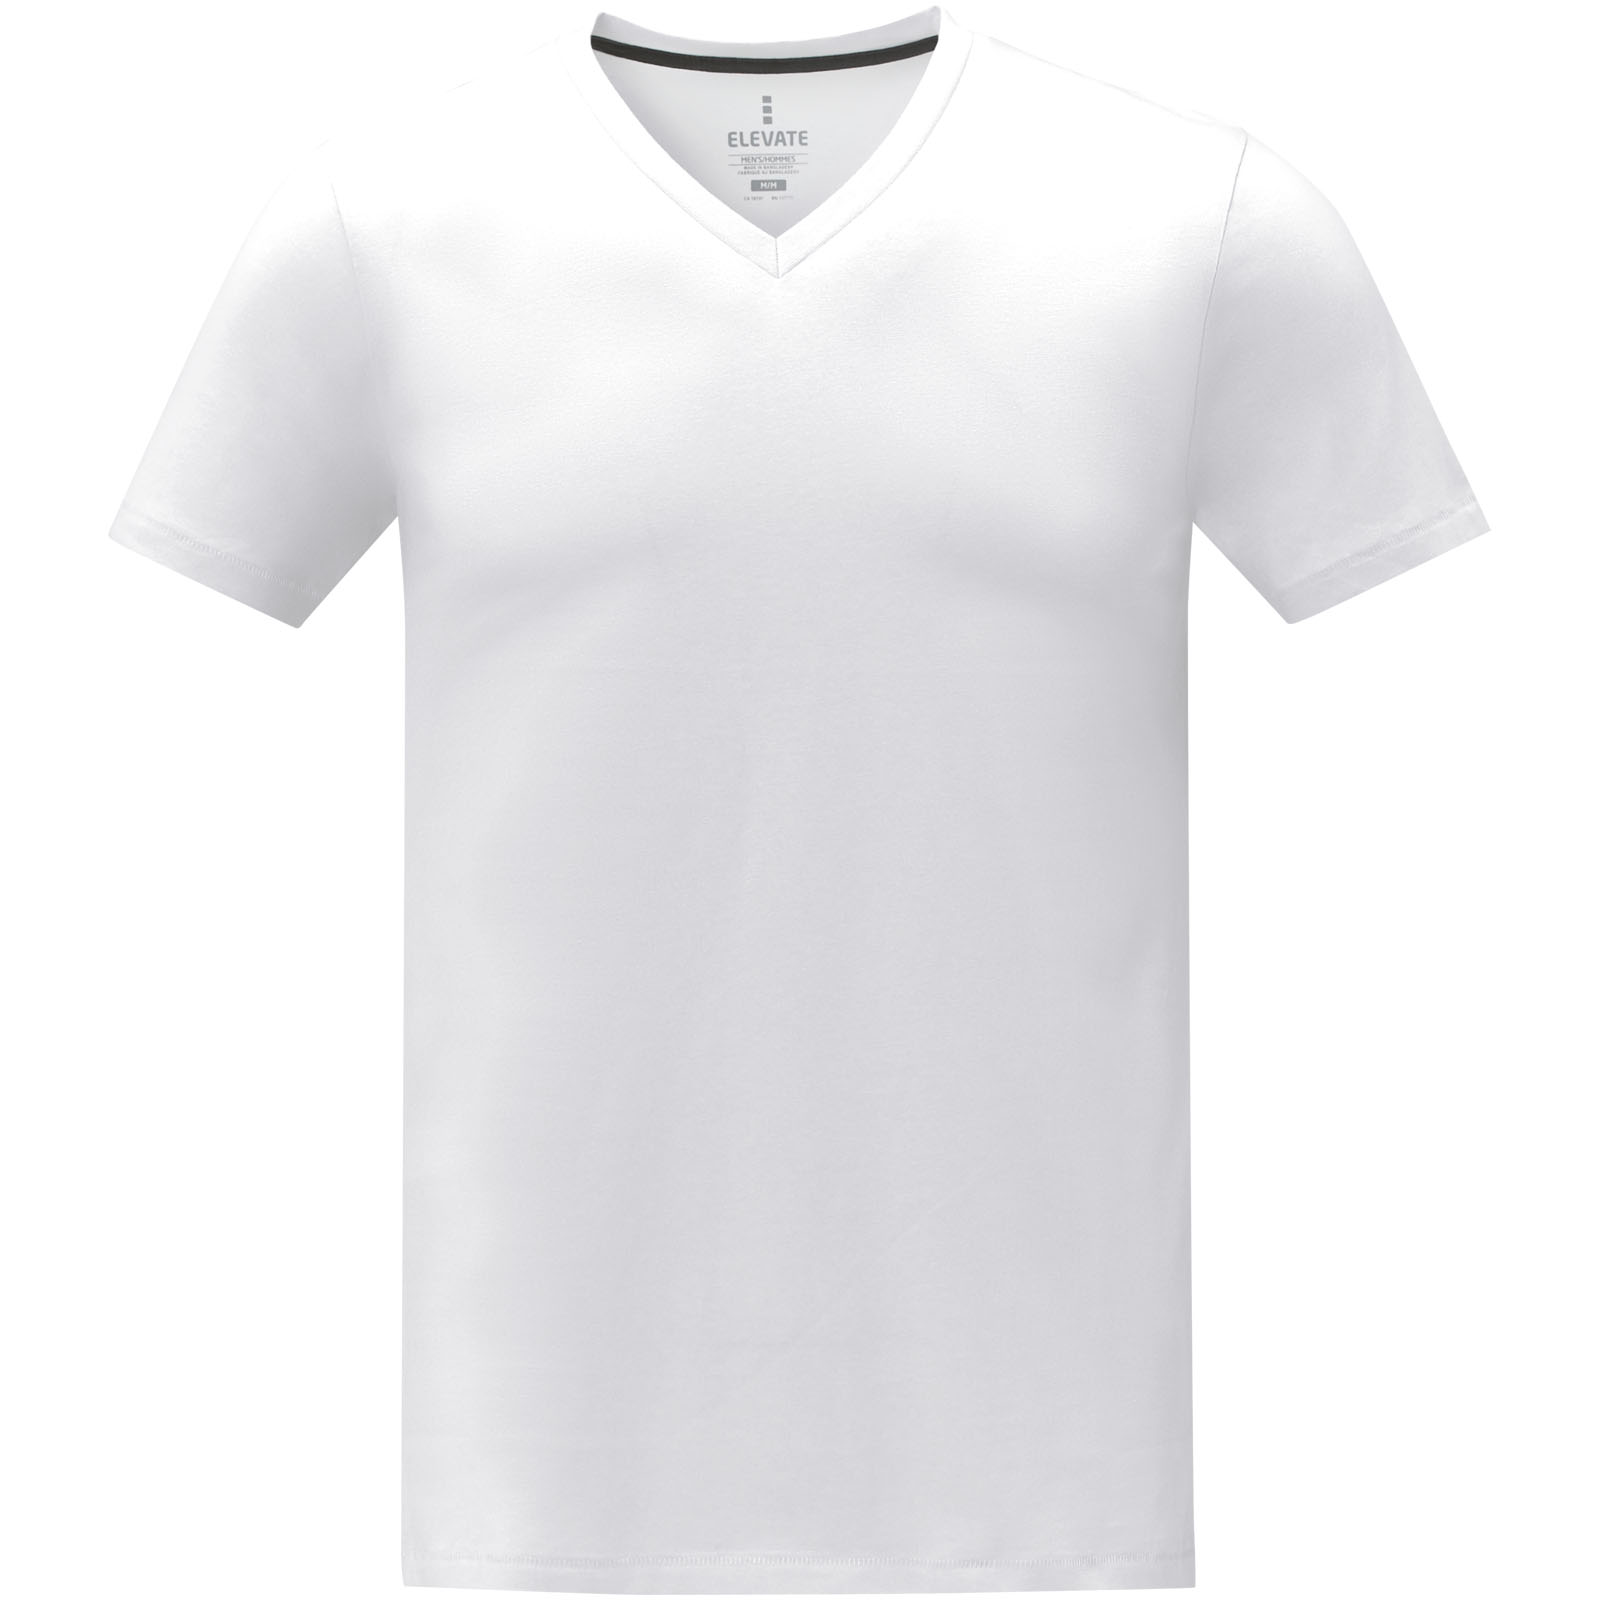 Advertising T-shirts - Somoto short sleeve men's V-neck t-shirt  - 1